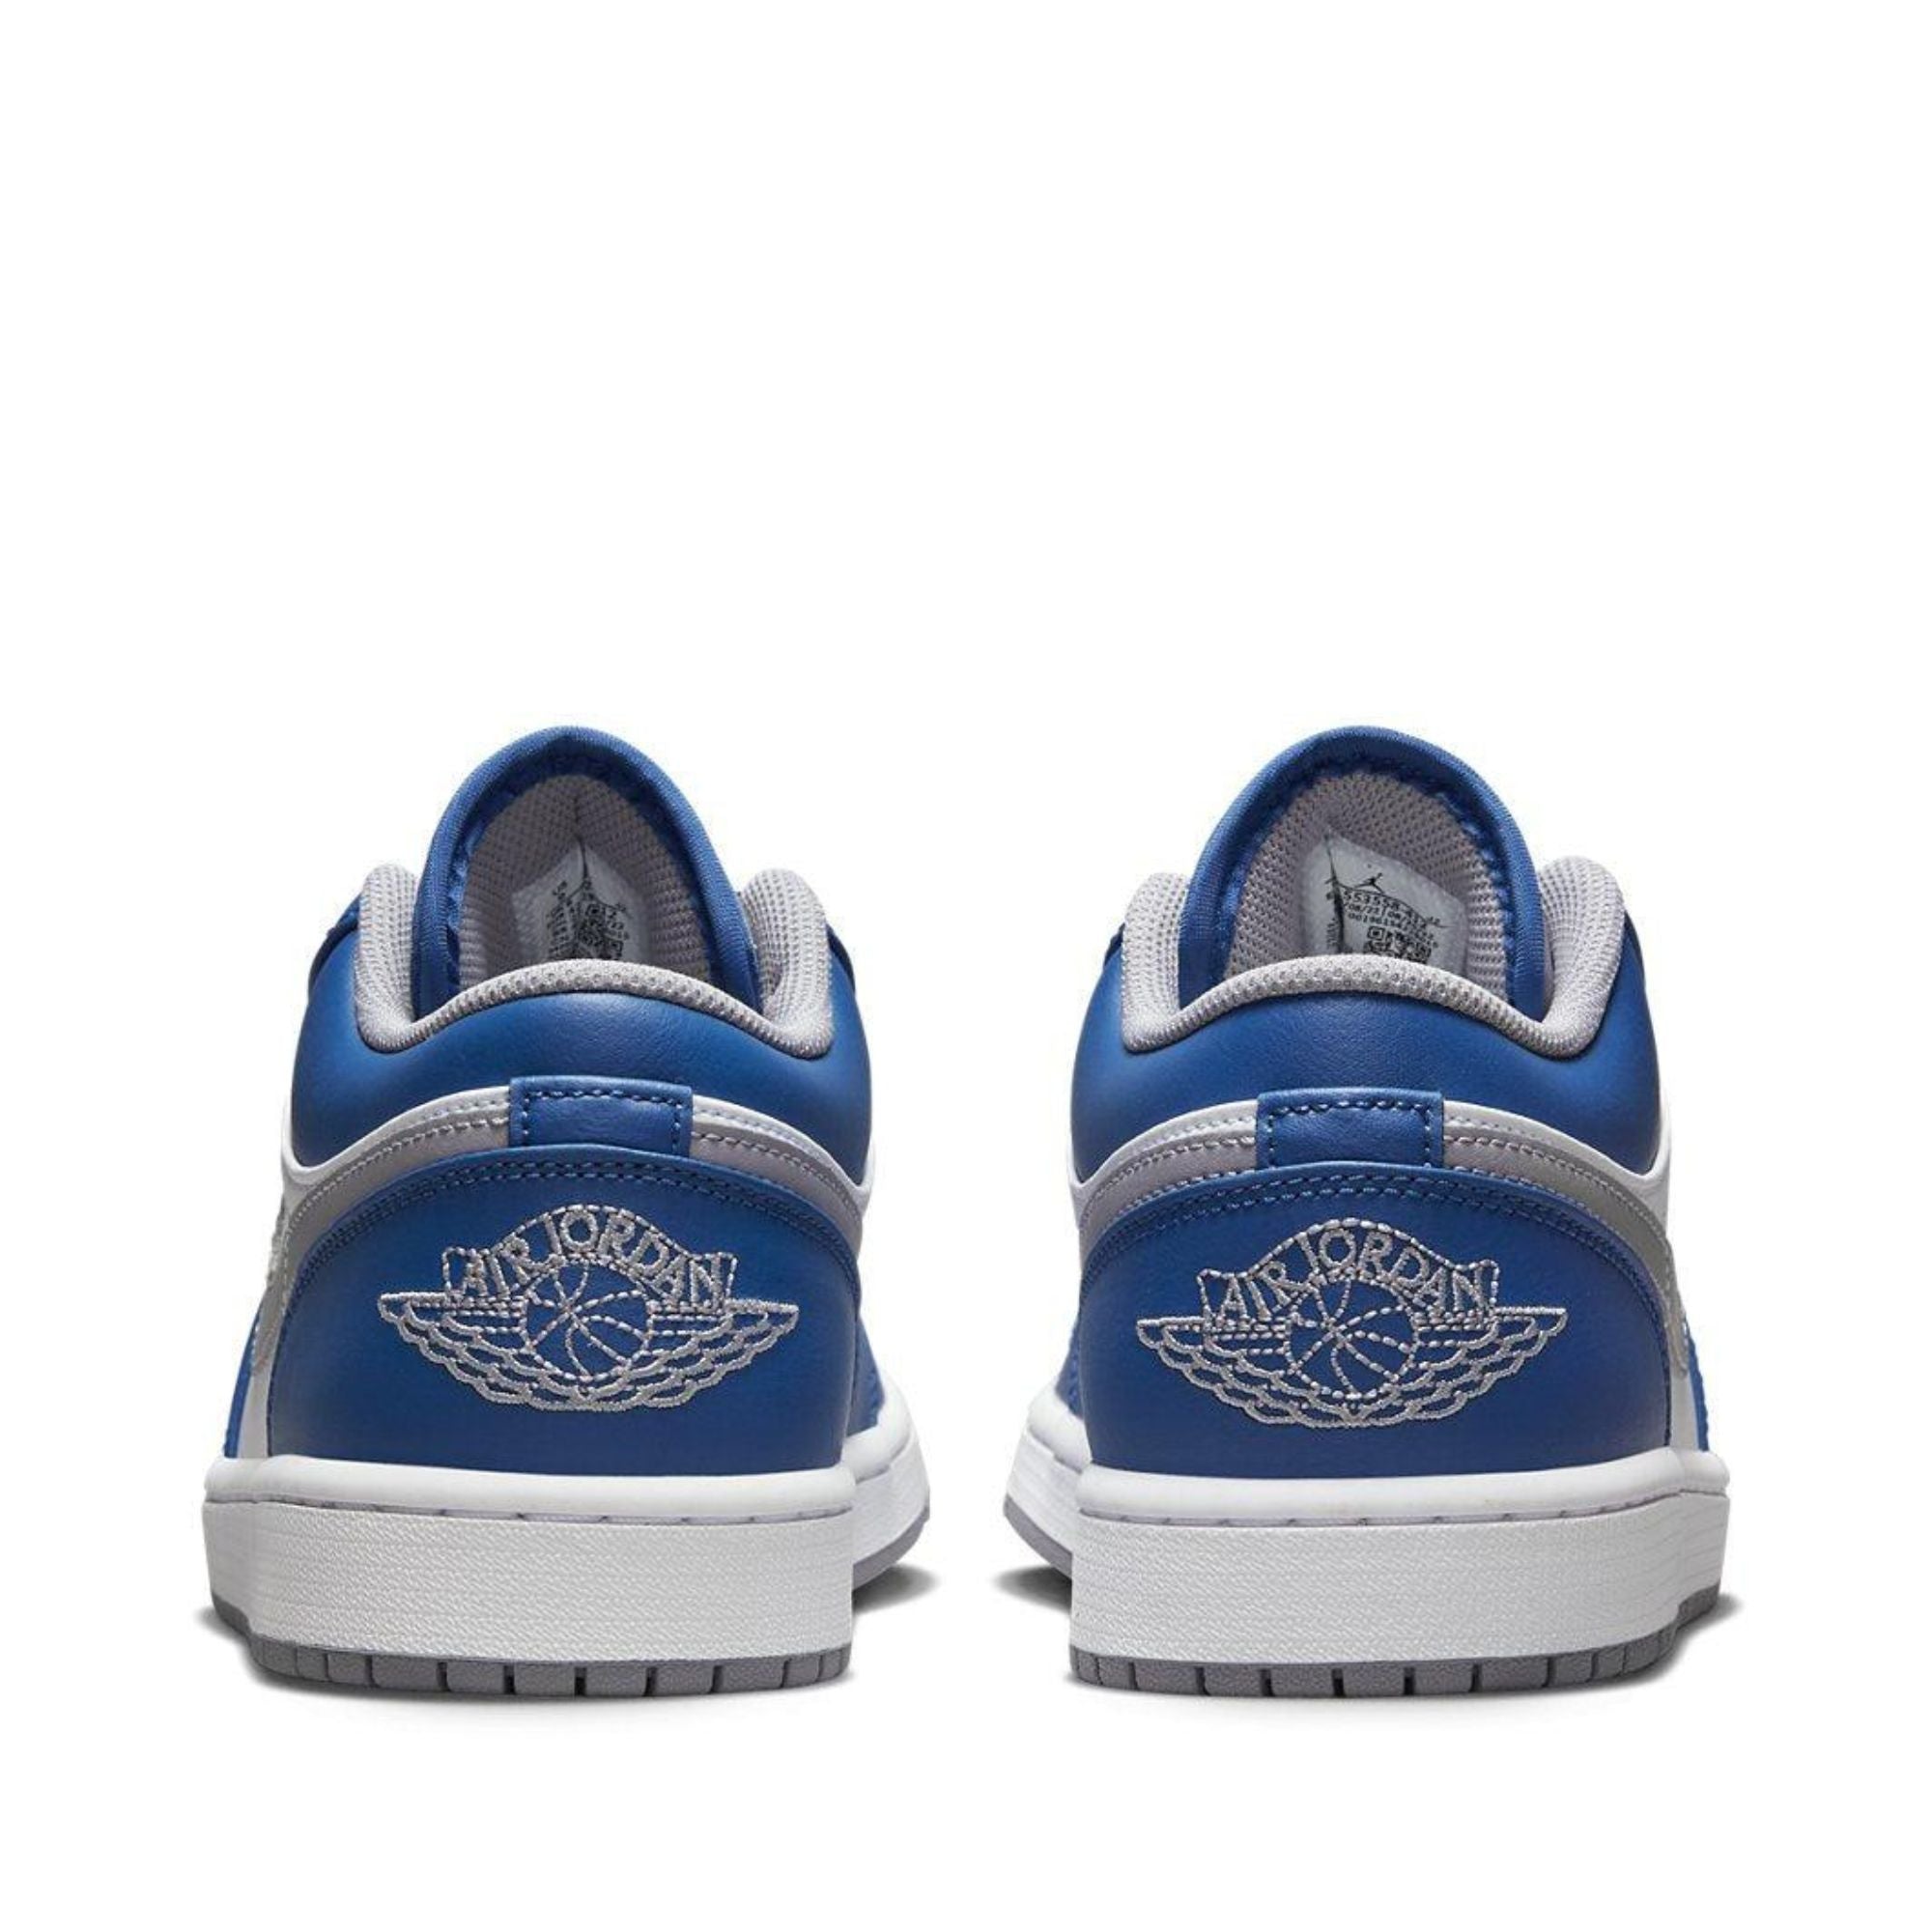 Air Jordan 1 Low ’True Blue’ Sneakers